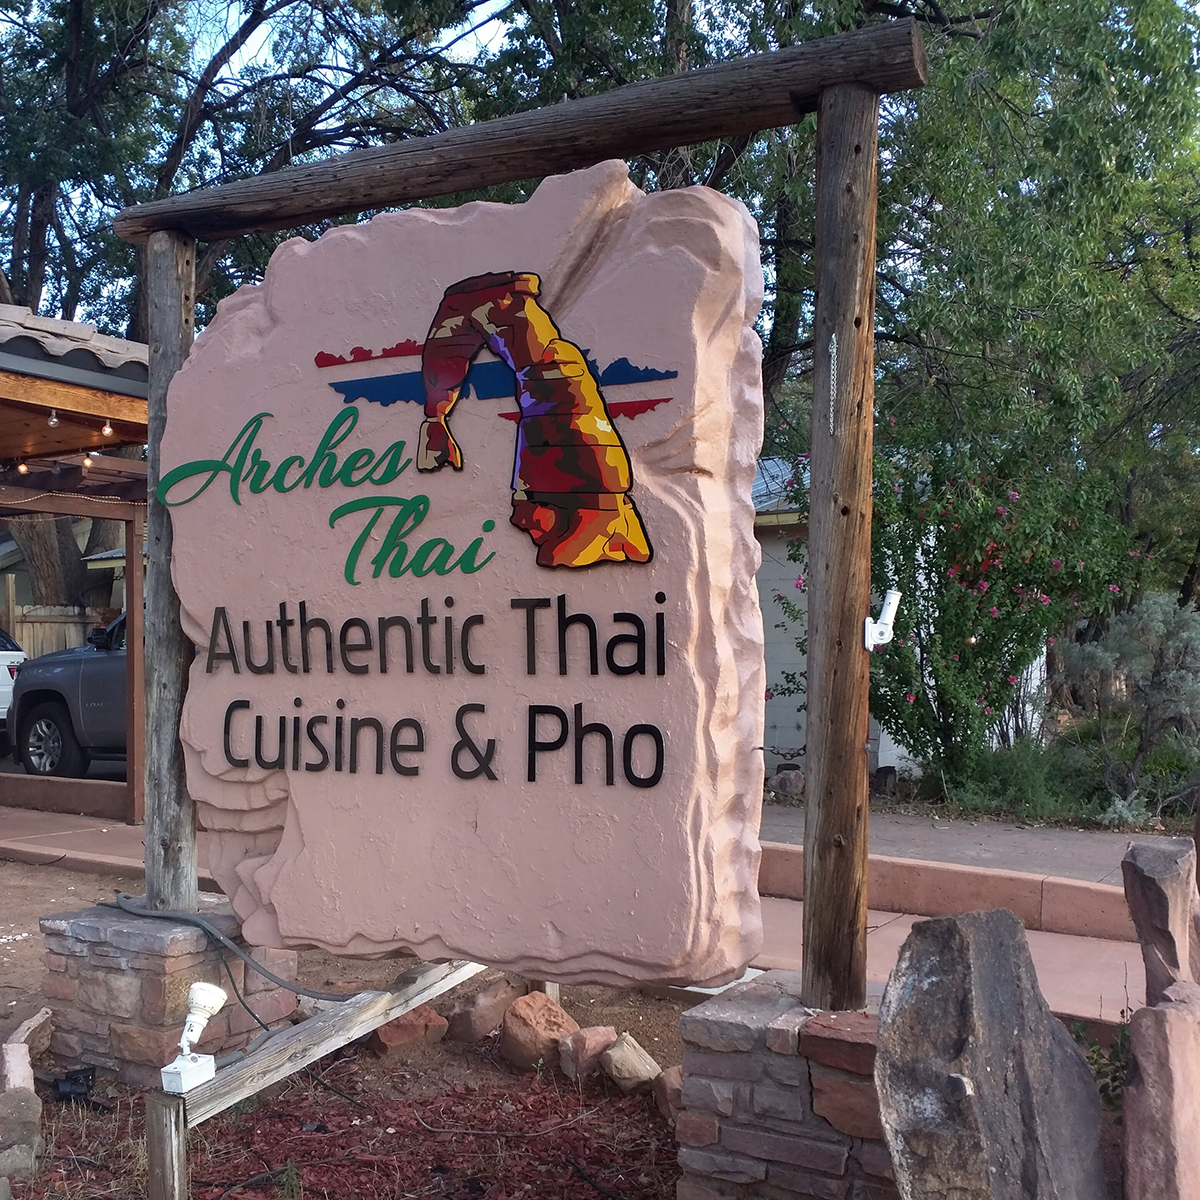 Arches Thai Restaurant in Moab, Utah